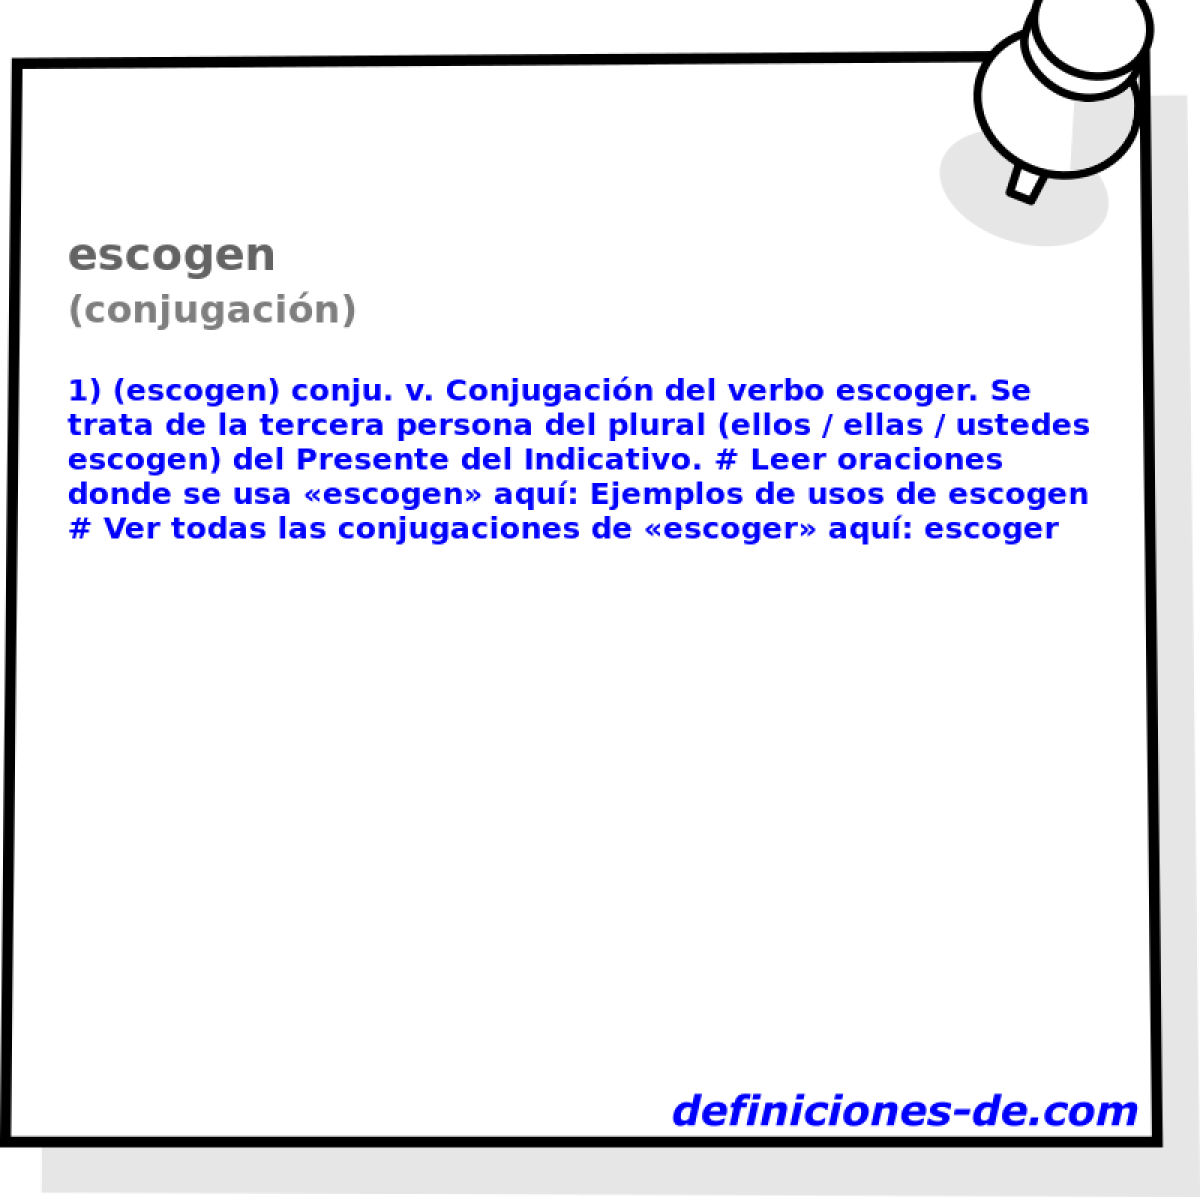 escogen (conjugacin)